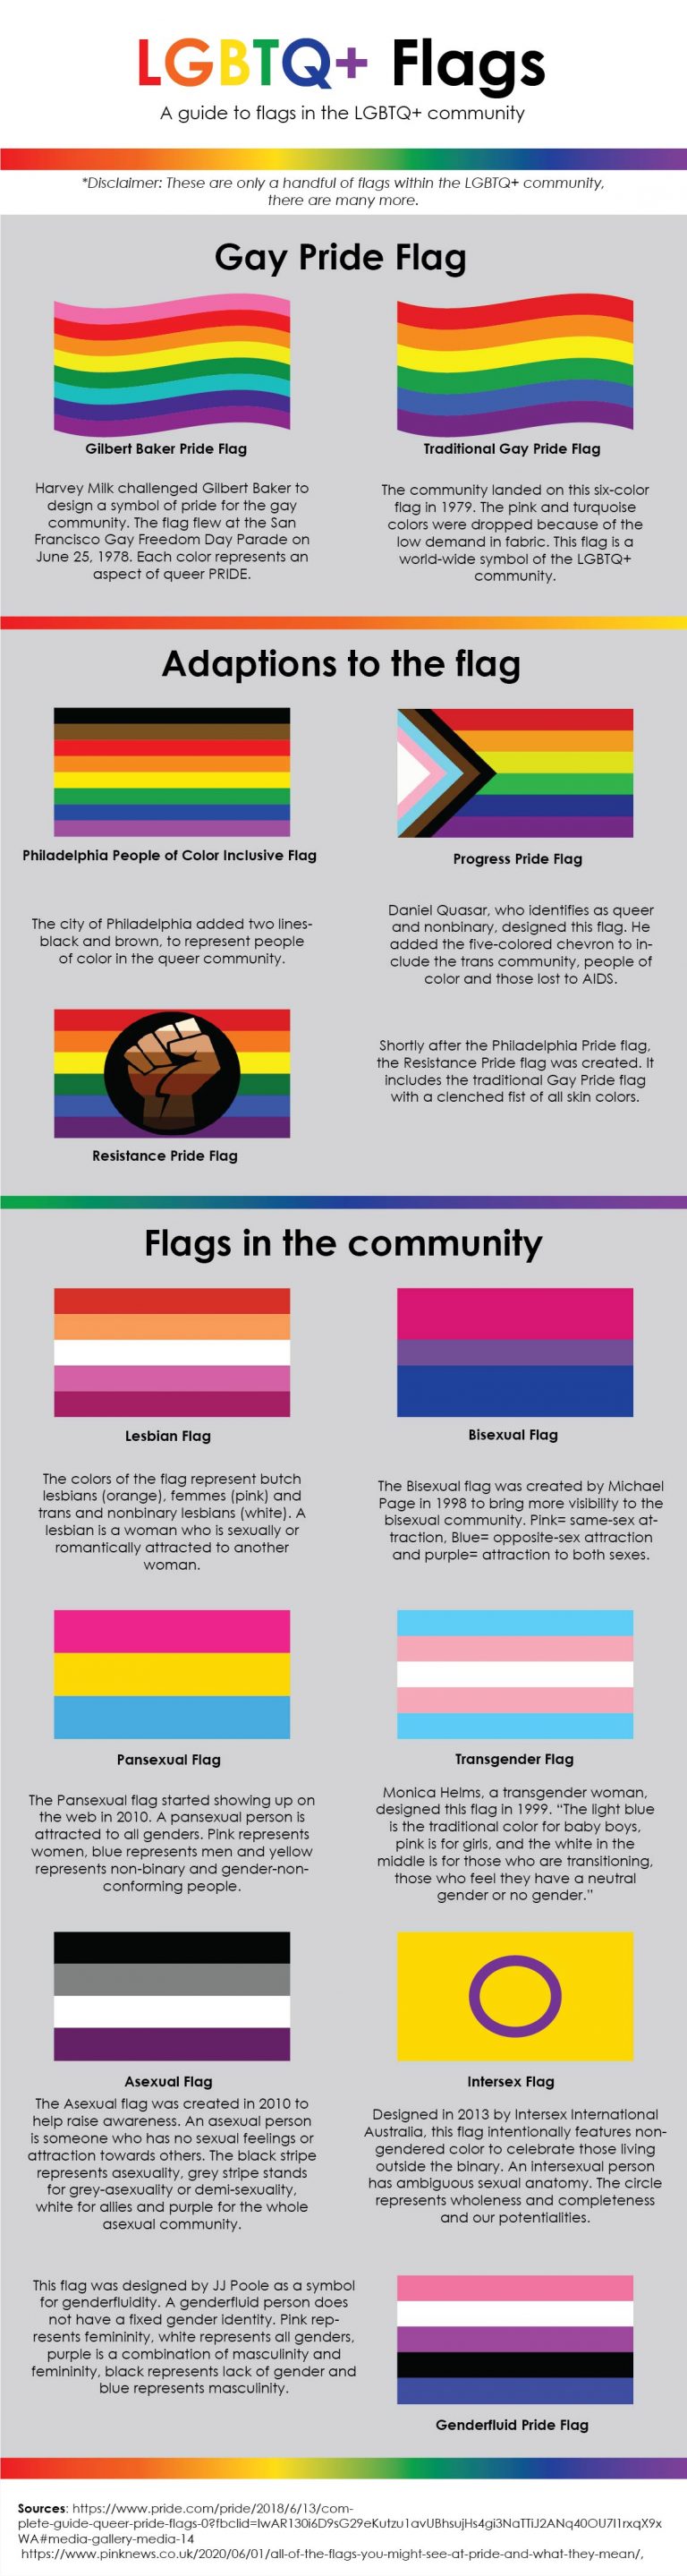 ЛГБТ квир флаг